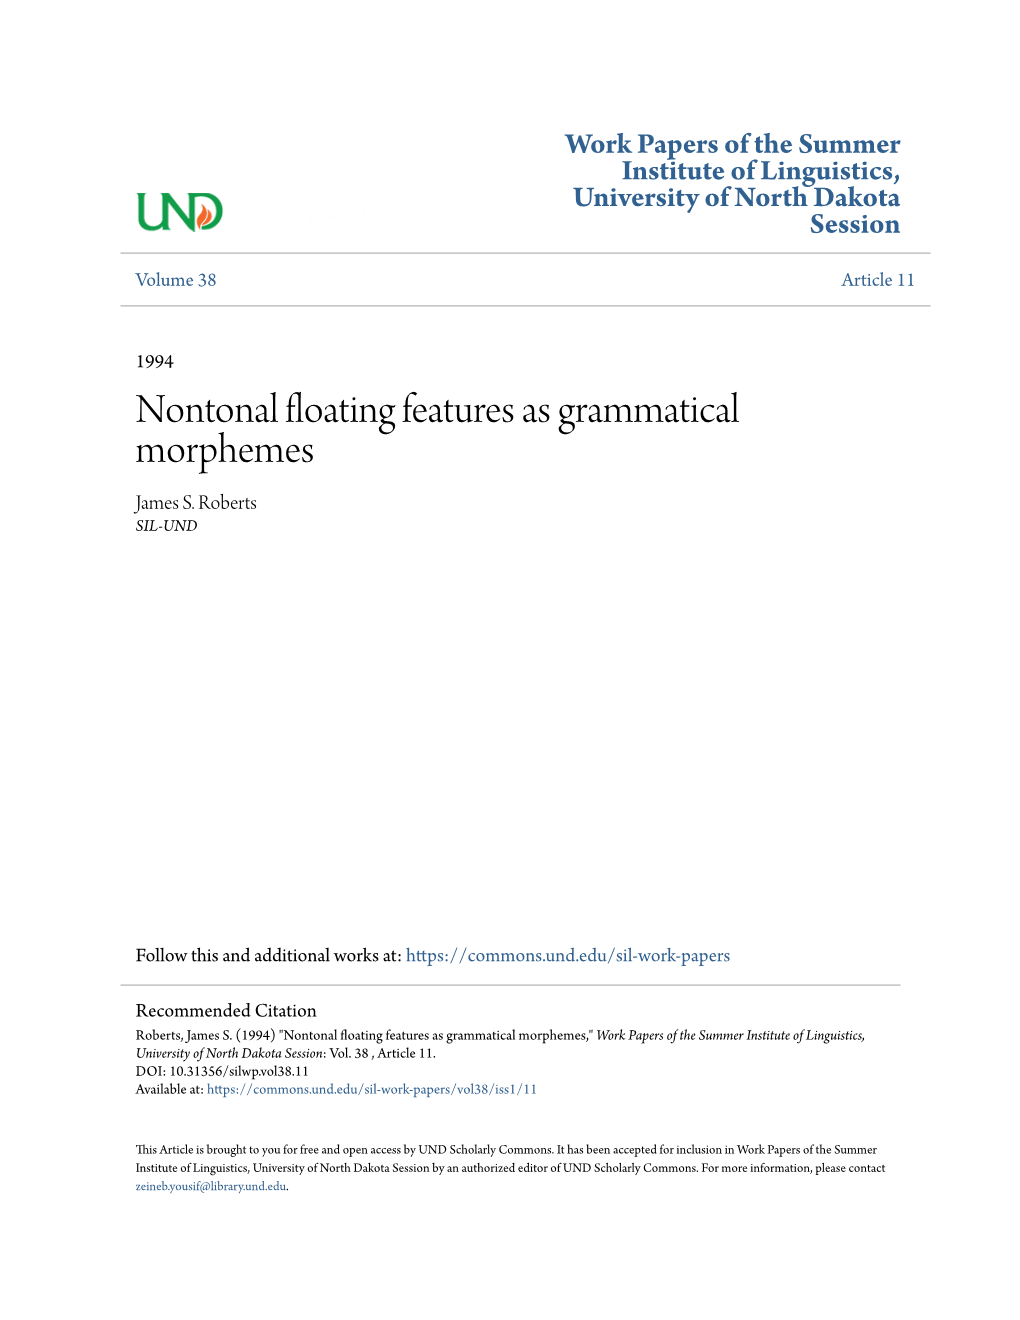 Nontonal Floating Features As Grammatical Morphemes James S